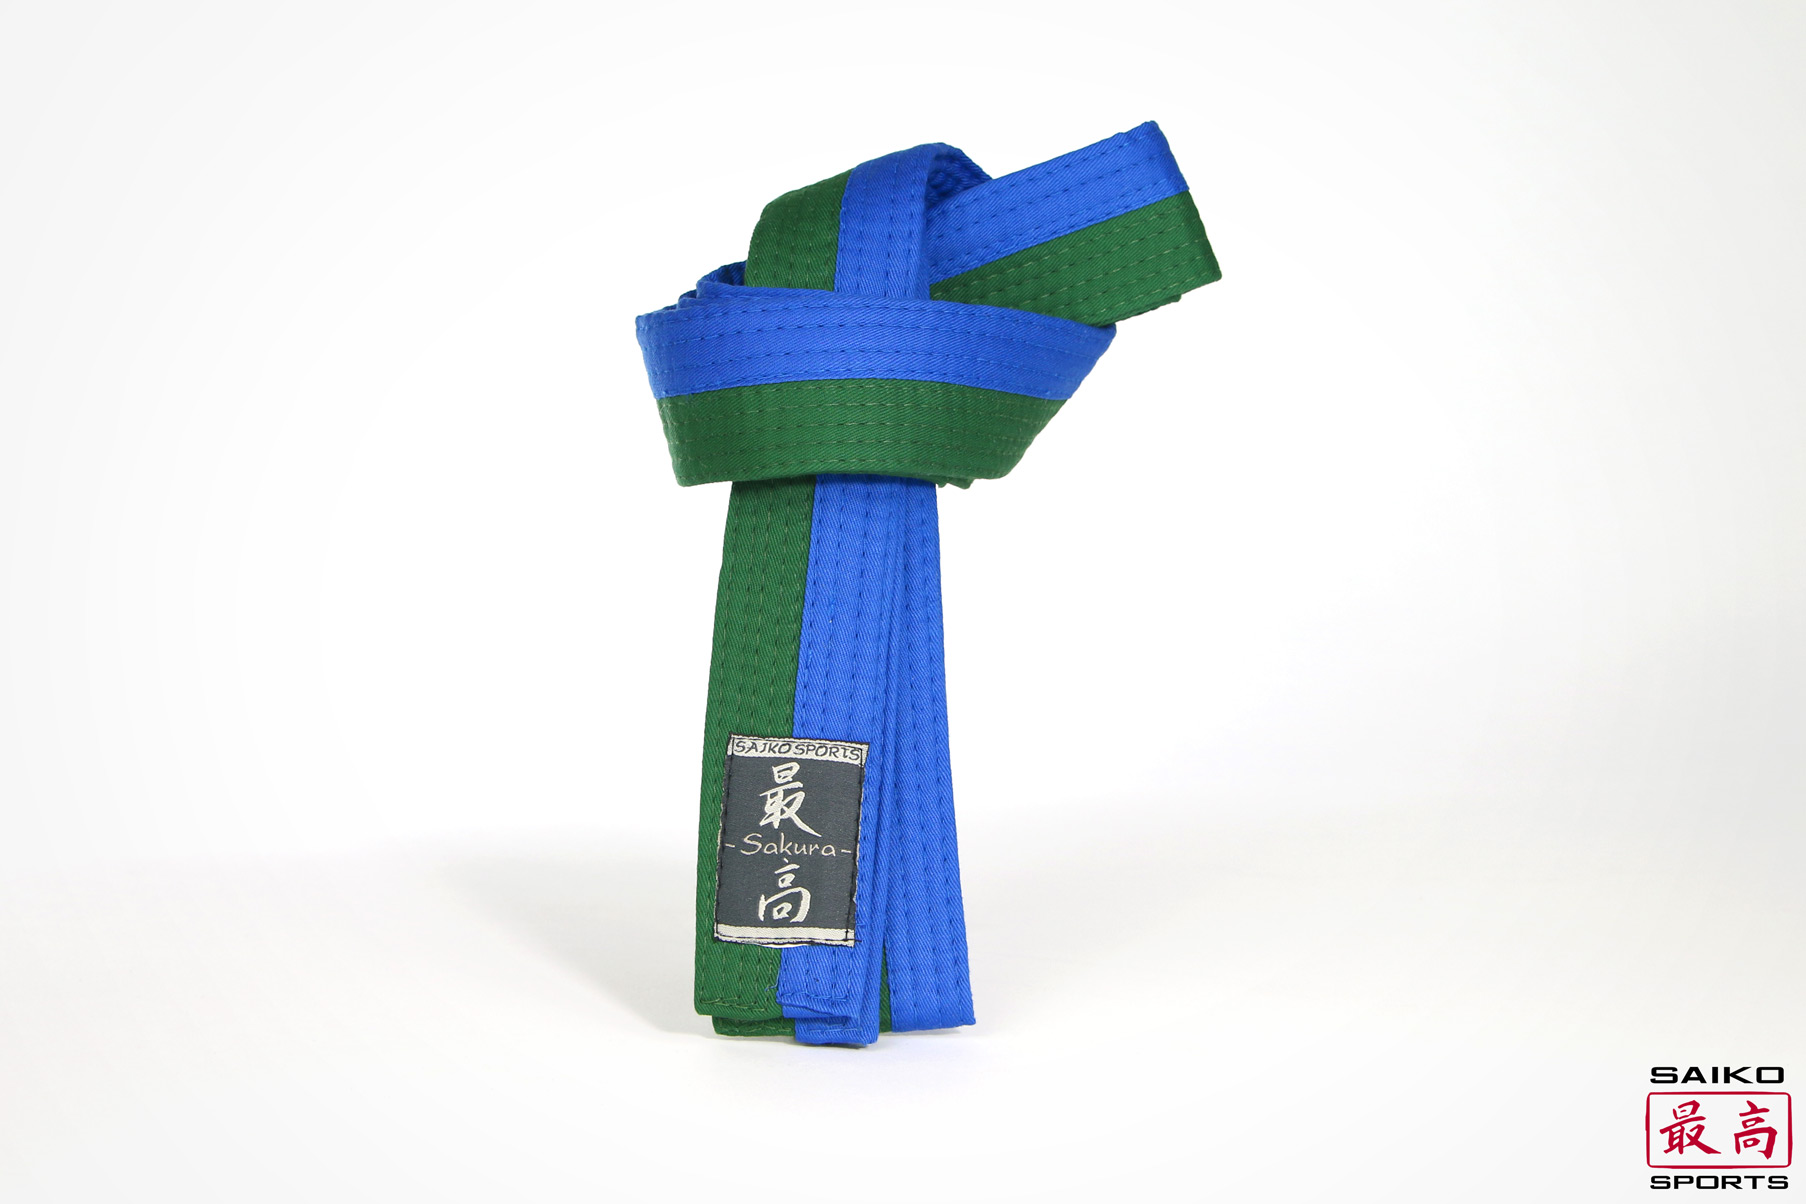 SaikoSports - Karate leben - Kinderkarategürtel - grün-blau